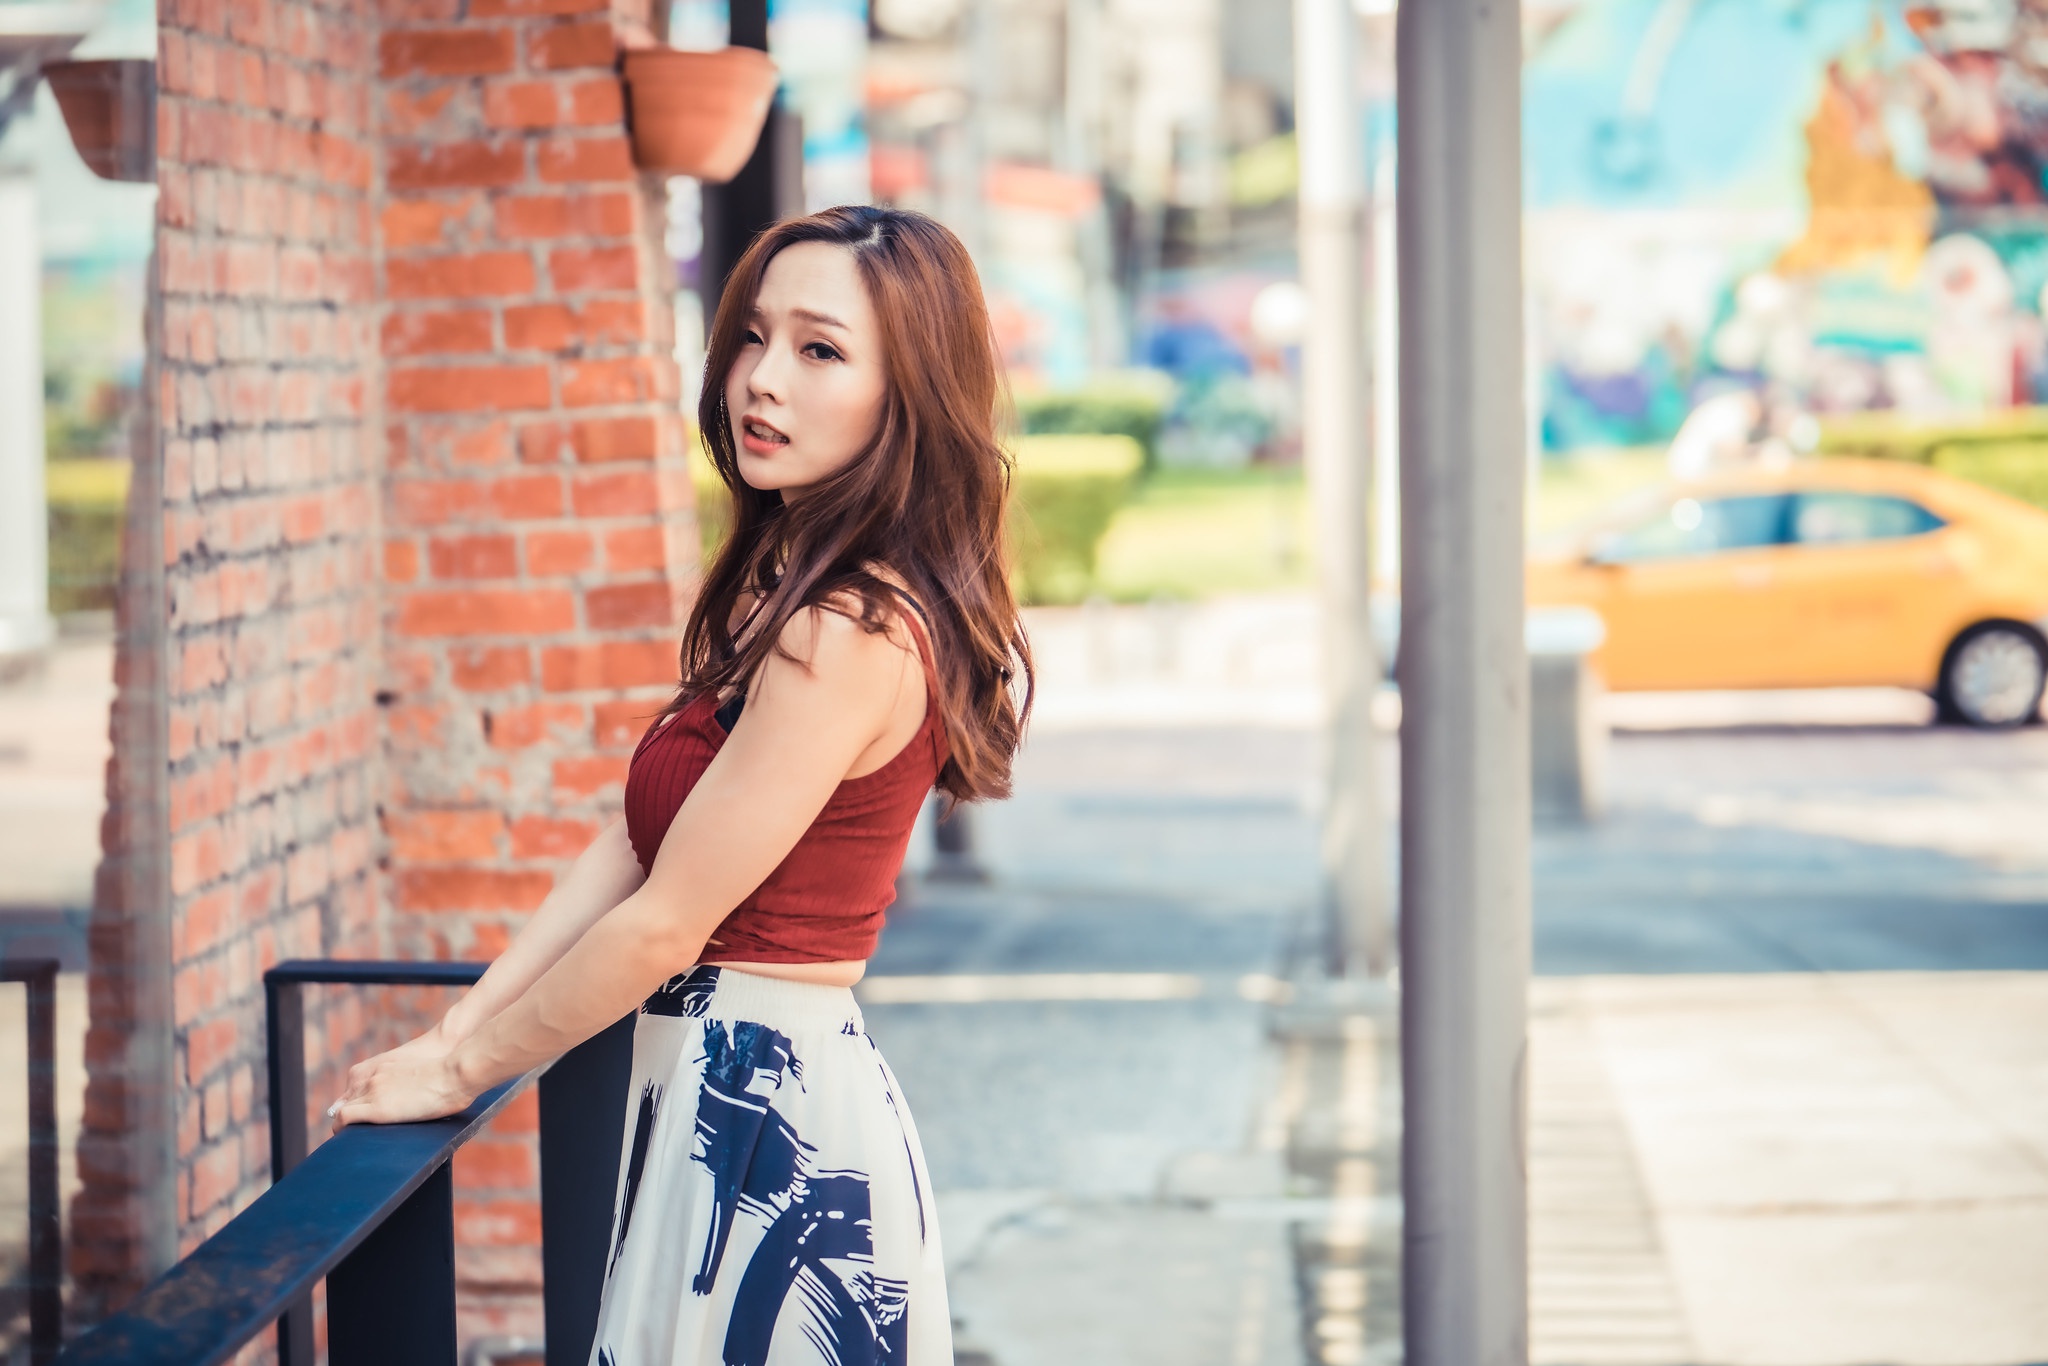 Asian Model Women Long Hair Brunette Red Tops Skirt Railings Taxi Bricks Wall Poles 2048x1366